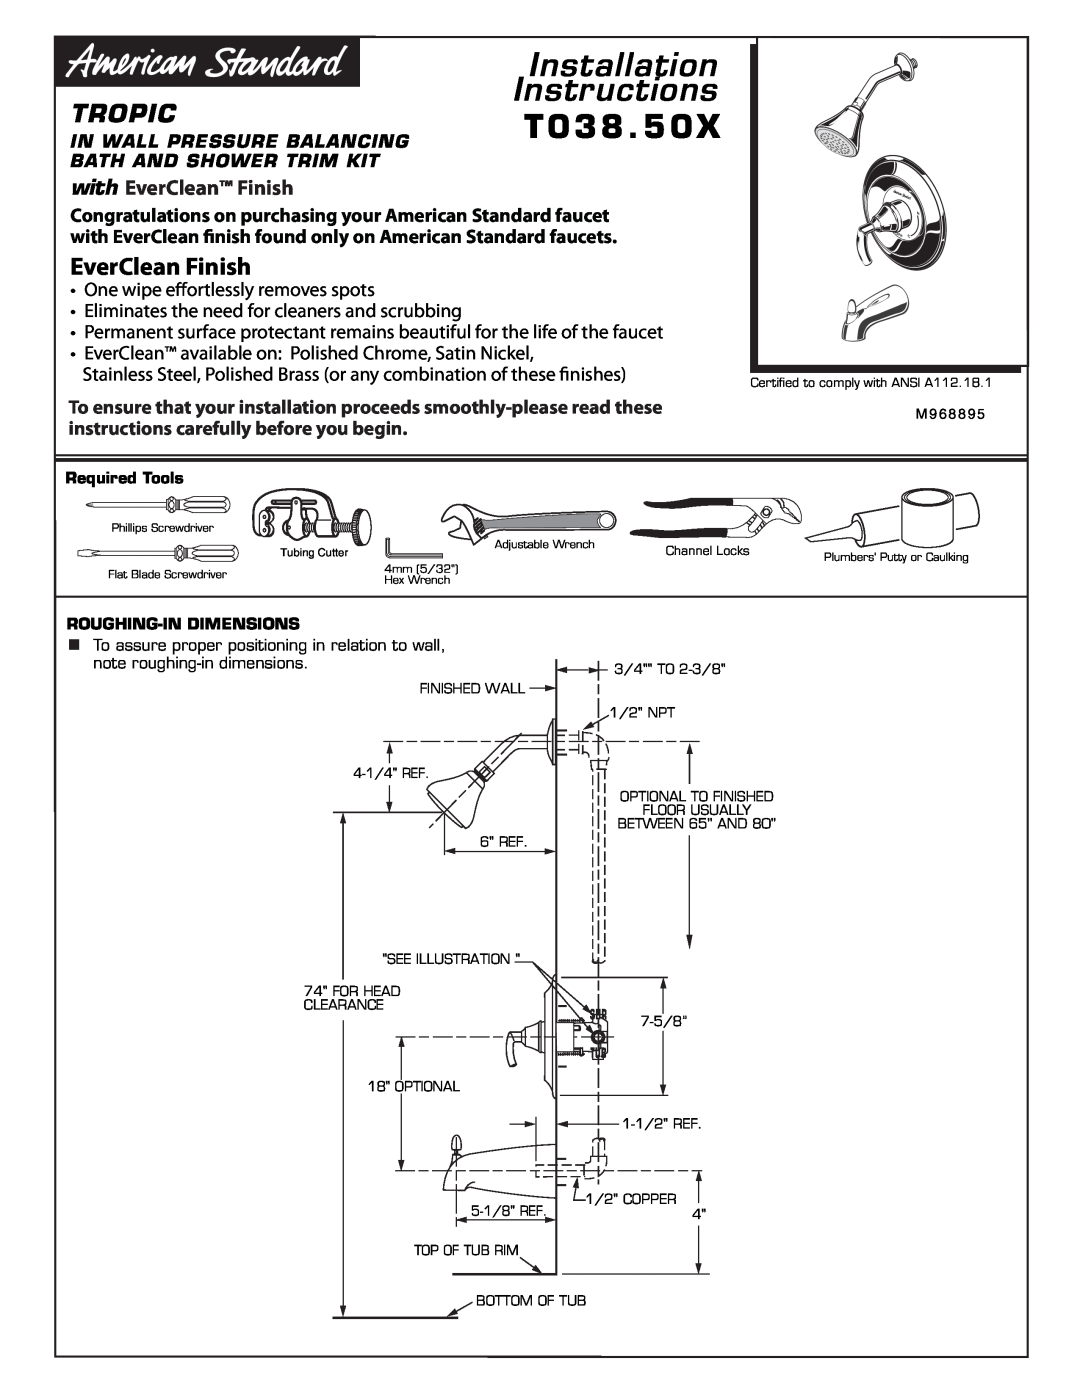 American Standard T038.50X installation instructions Installation Instructions, T 0 3 8 . 5, Tropic, EverClean Finish 